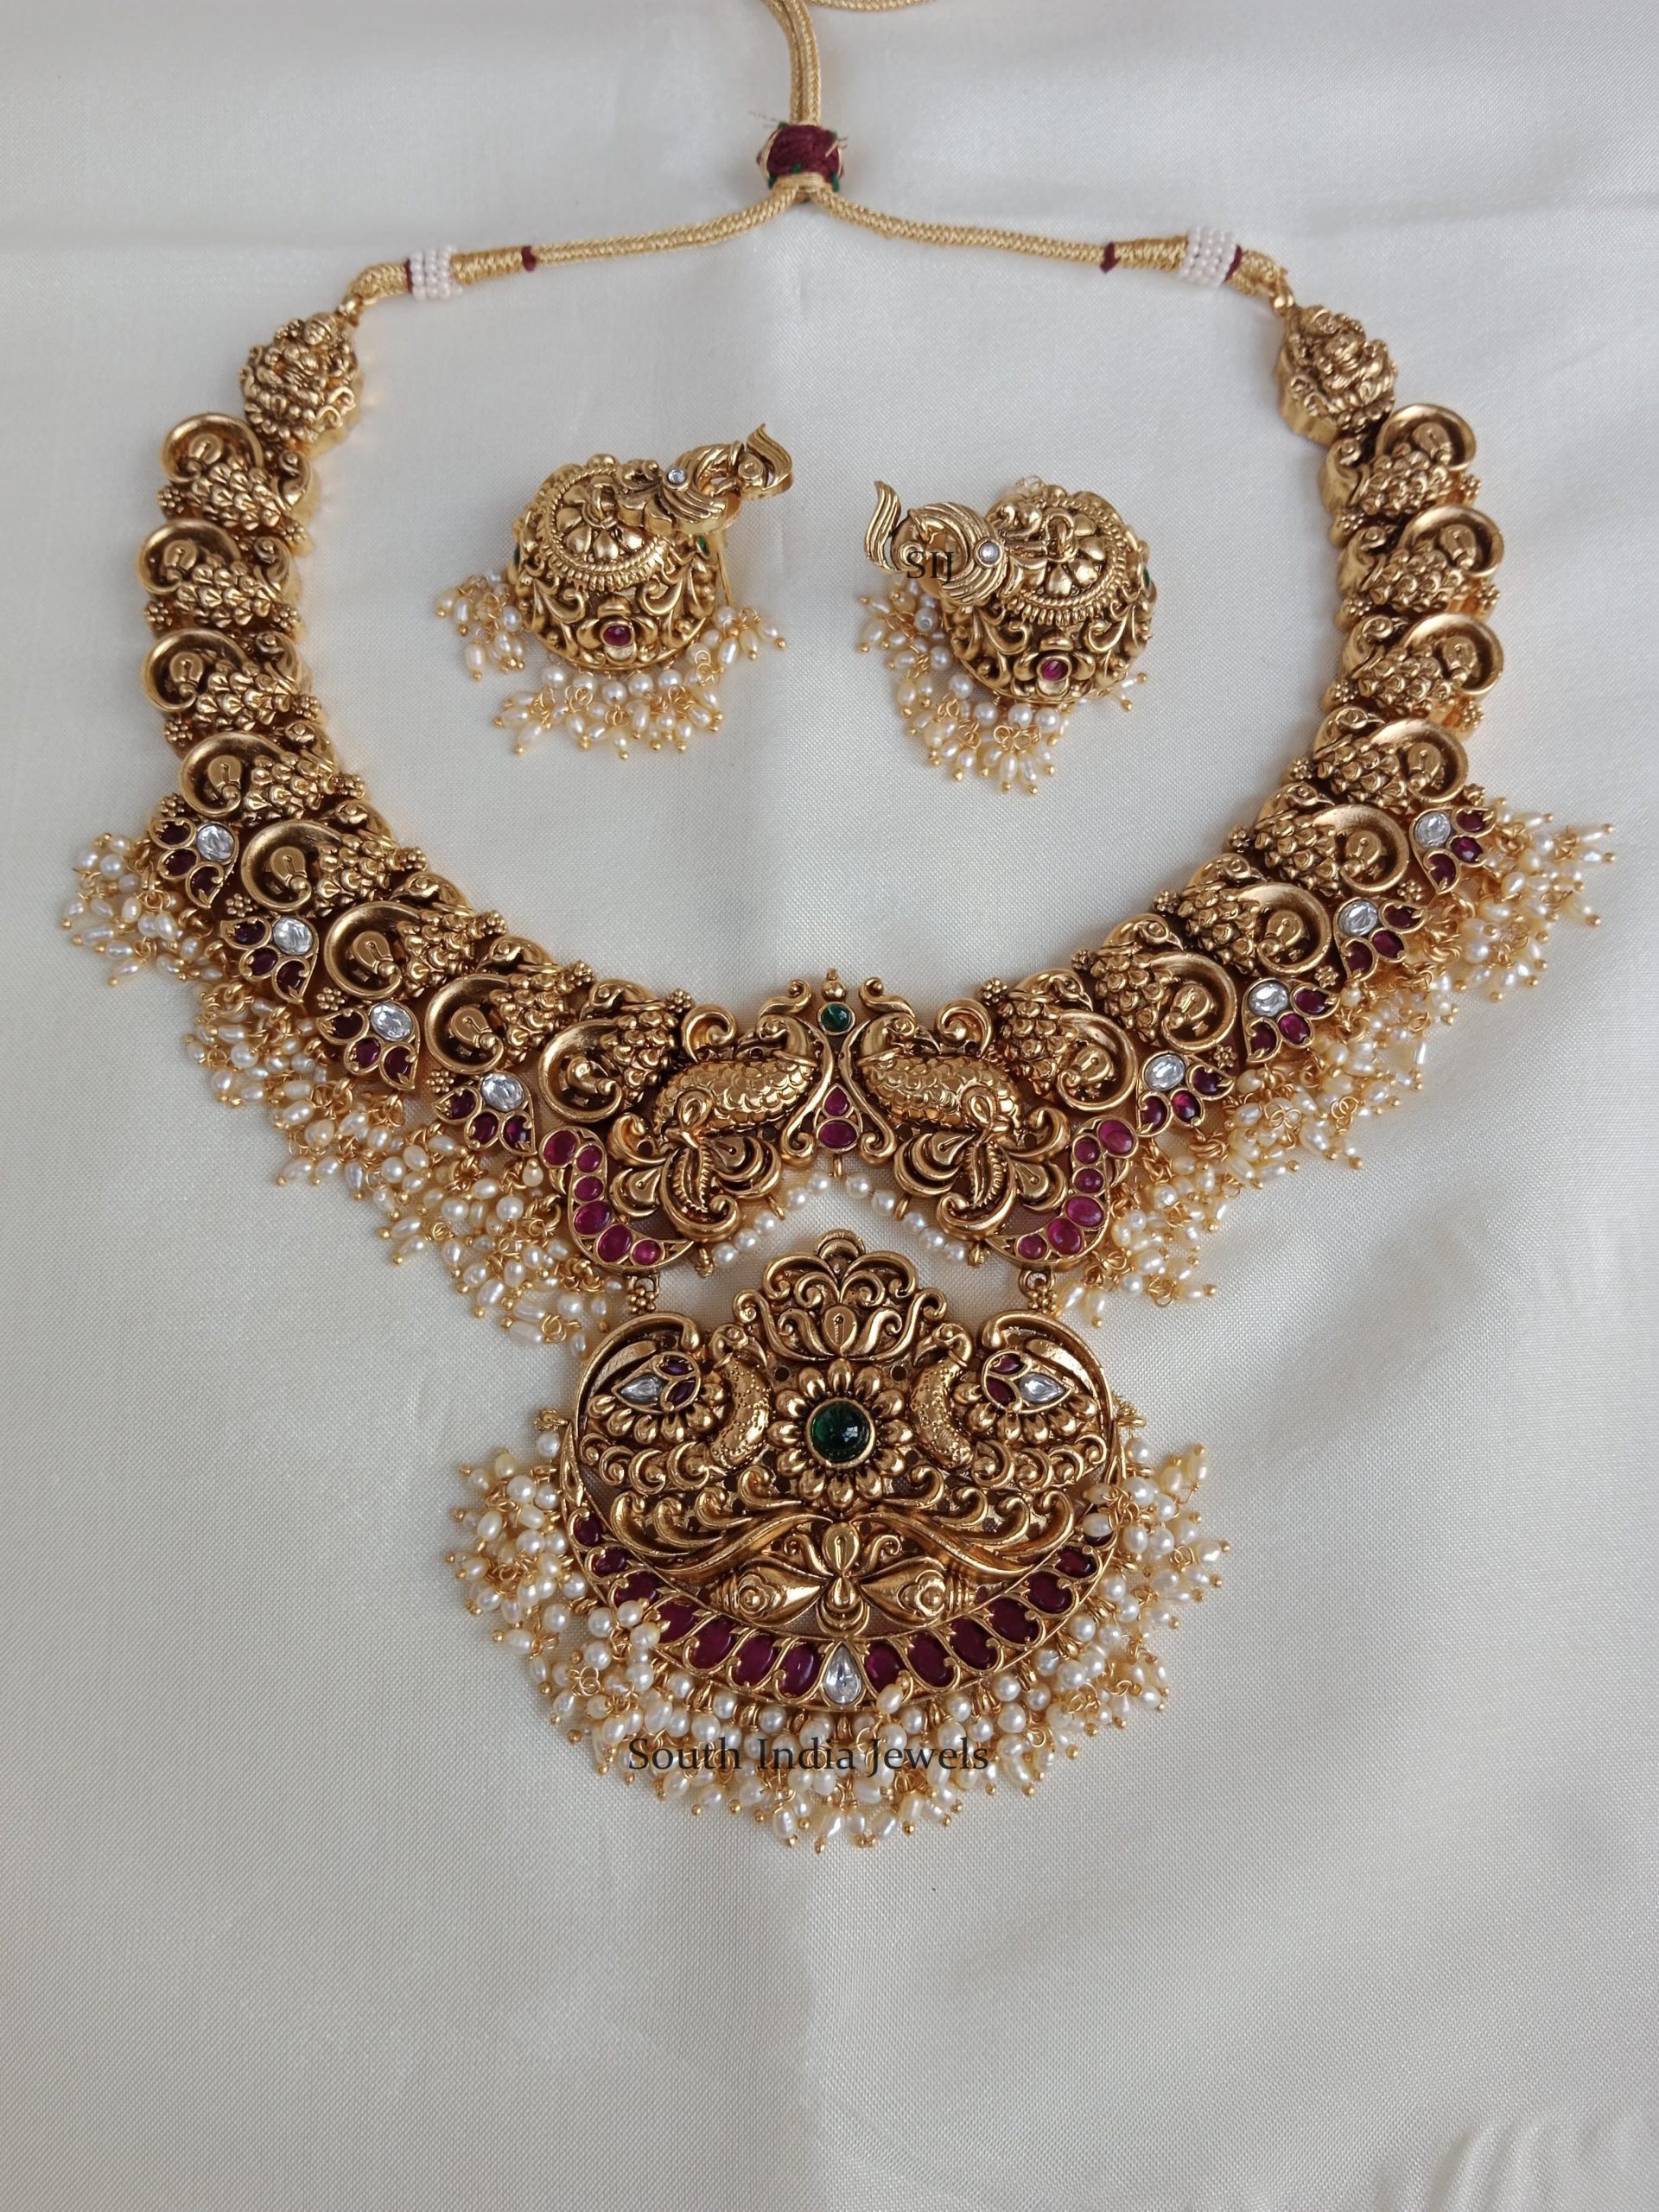 Antique Guttapusalu Necklace - South India Jewels